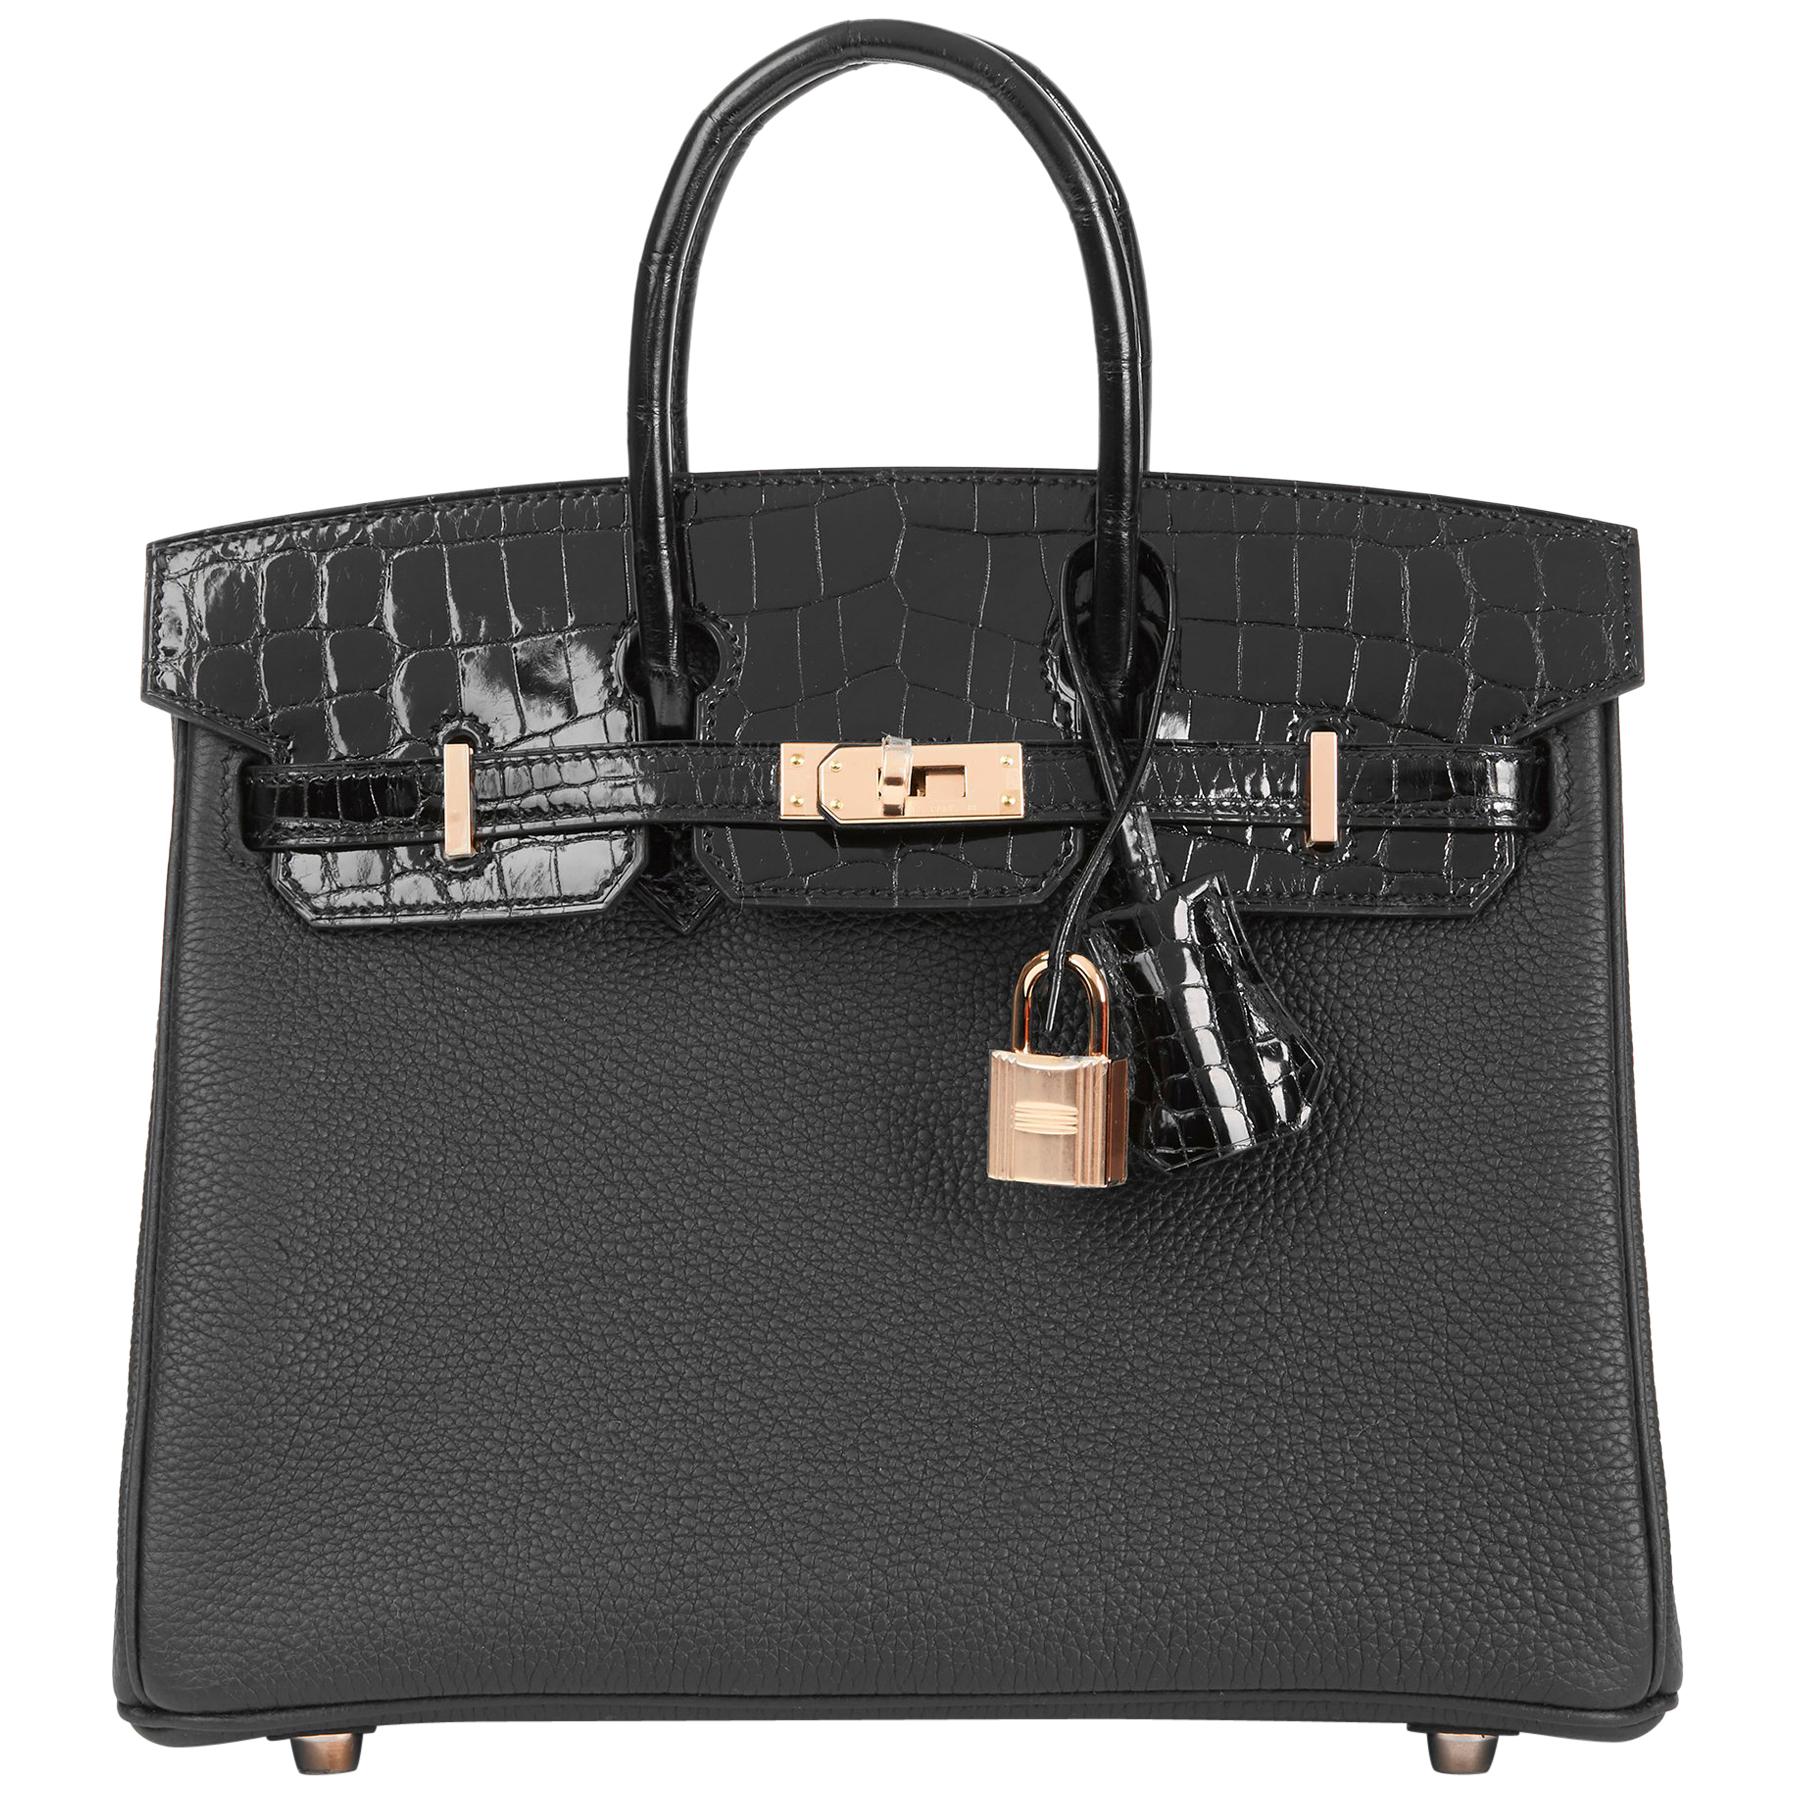 2019 Hermès Black Togo Leather & Niloticus Crocodile Leather Birkin 25cm Touch